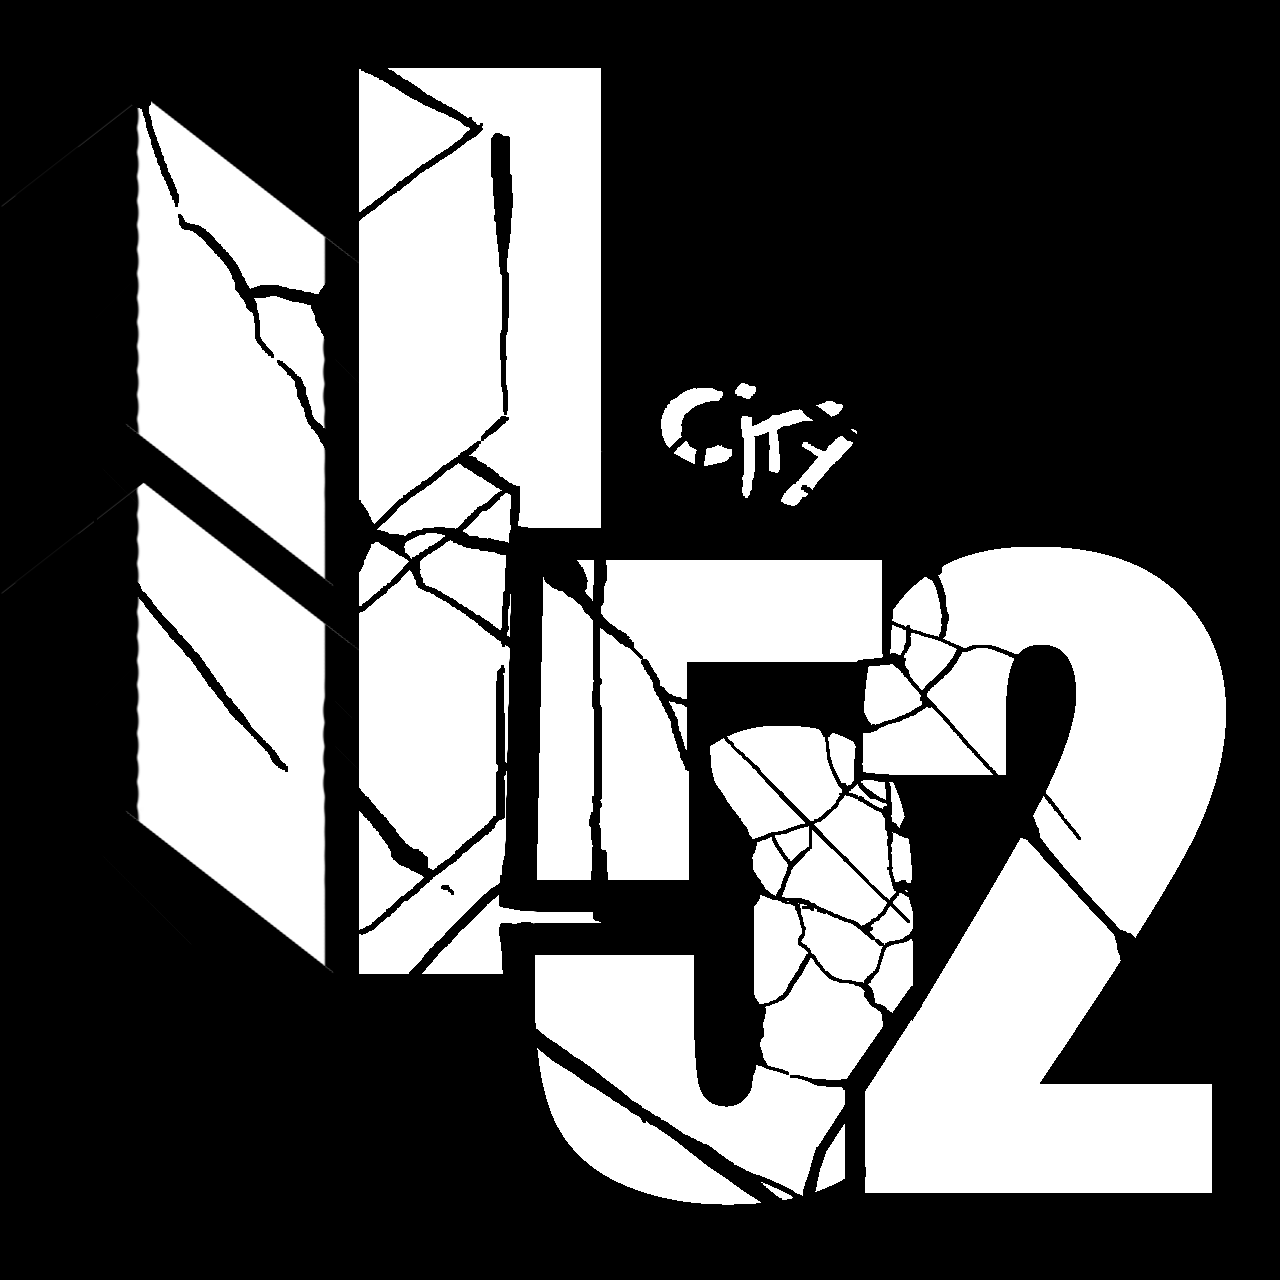 city52 logo hd post